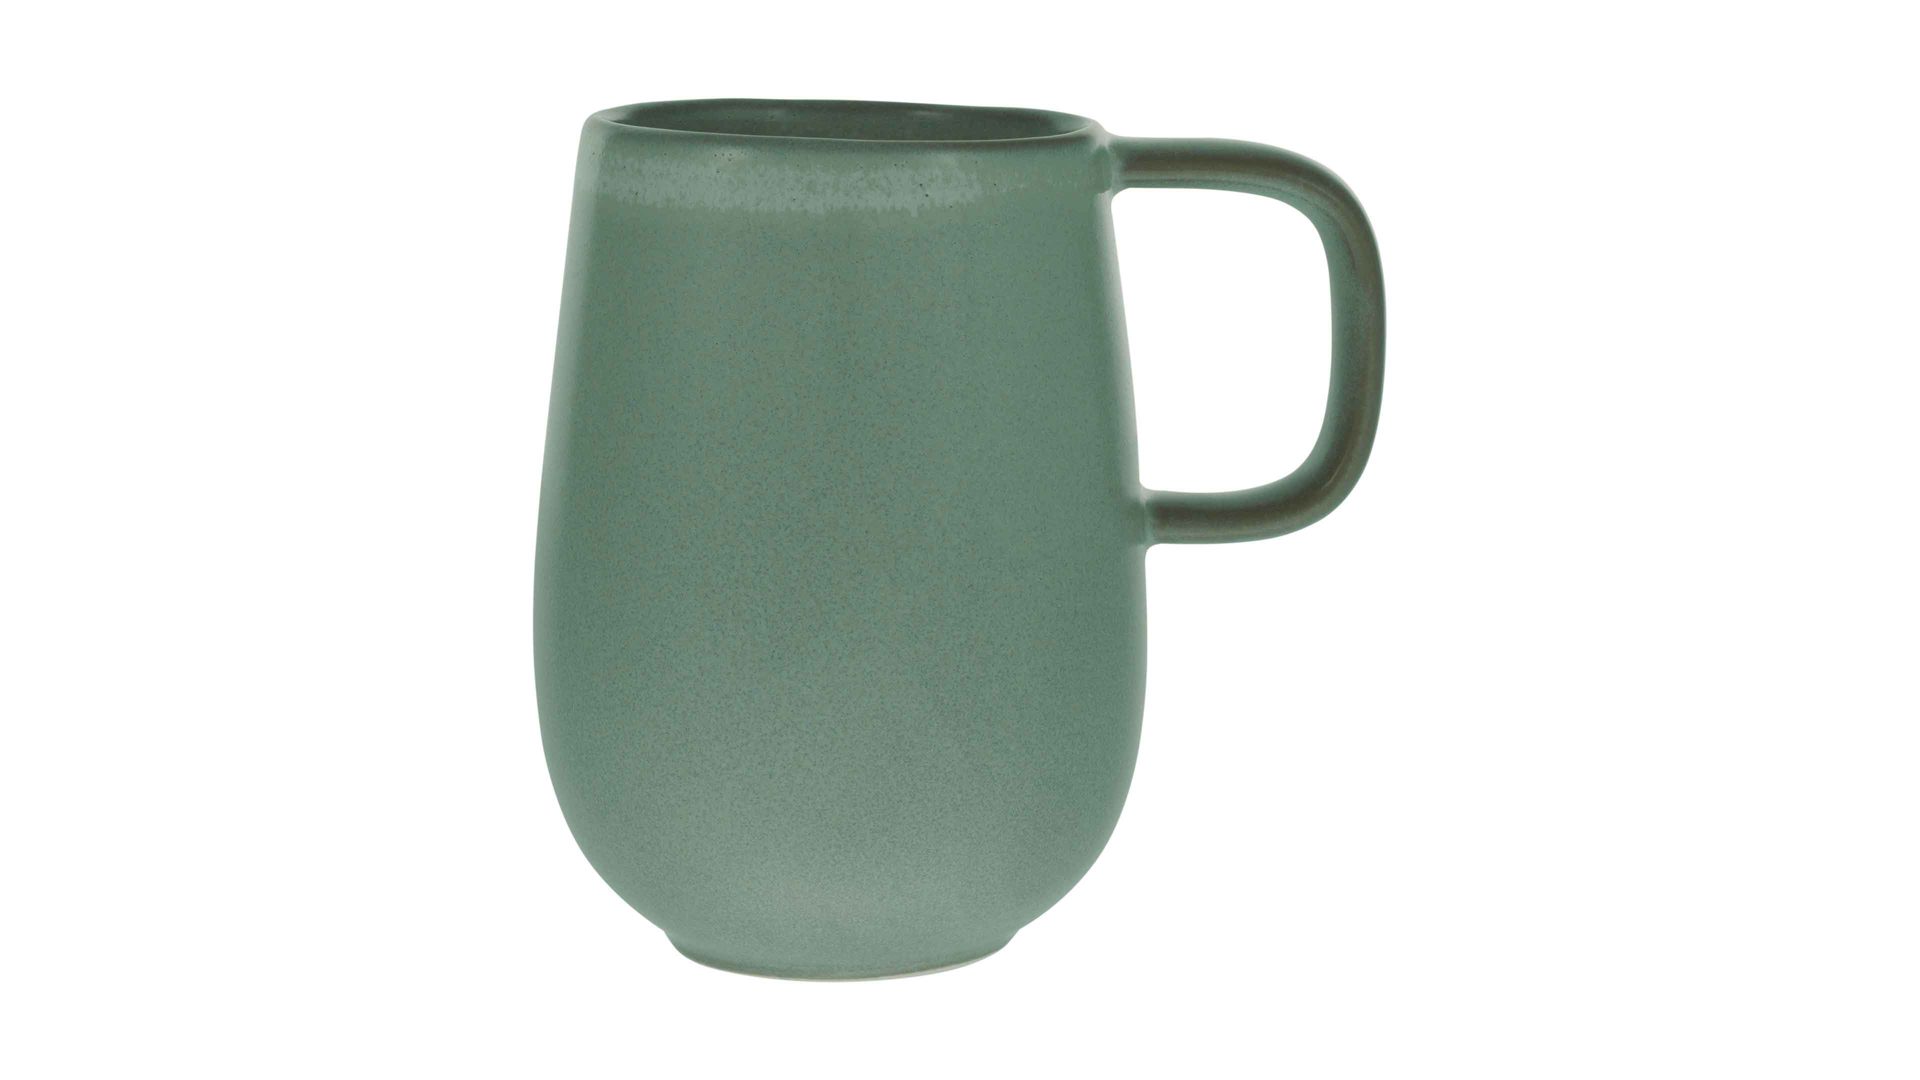 Kaffeebecher Creatable aus Keramik in Grün CREATABLE Uno – Kaffeebecher grünes Steinzeug - 370 ml Fassungsvermögen